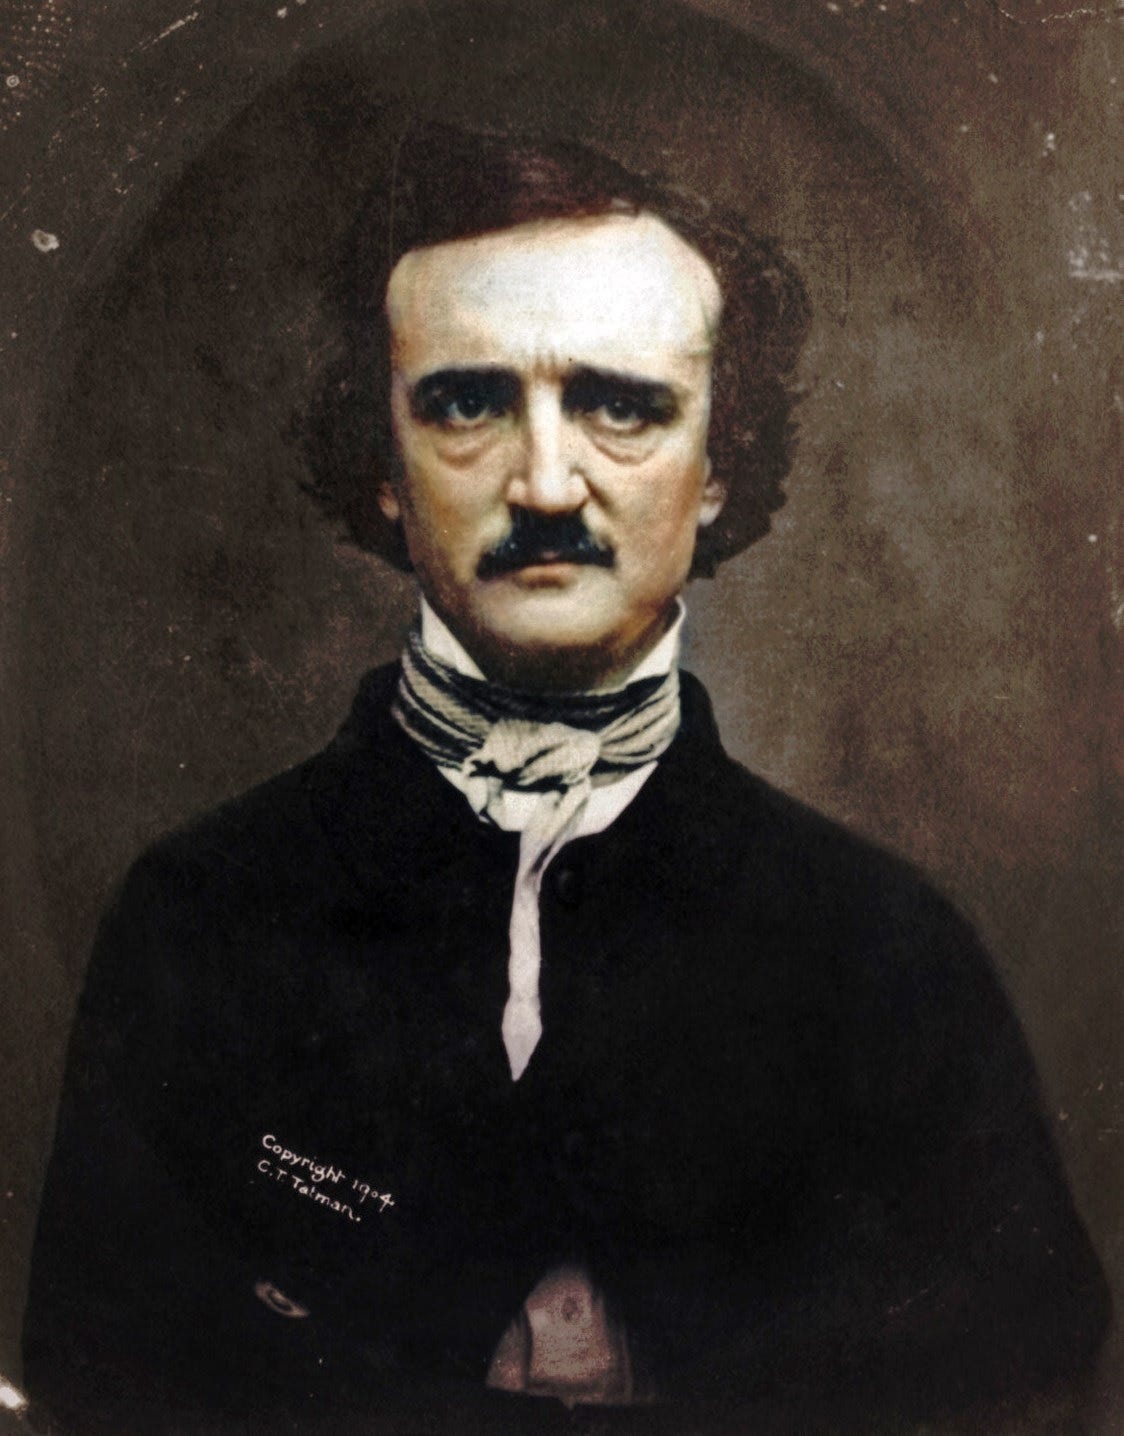 A colourised photograph of the author Edgar Allan Poe.